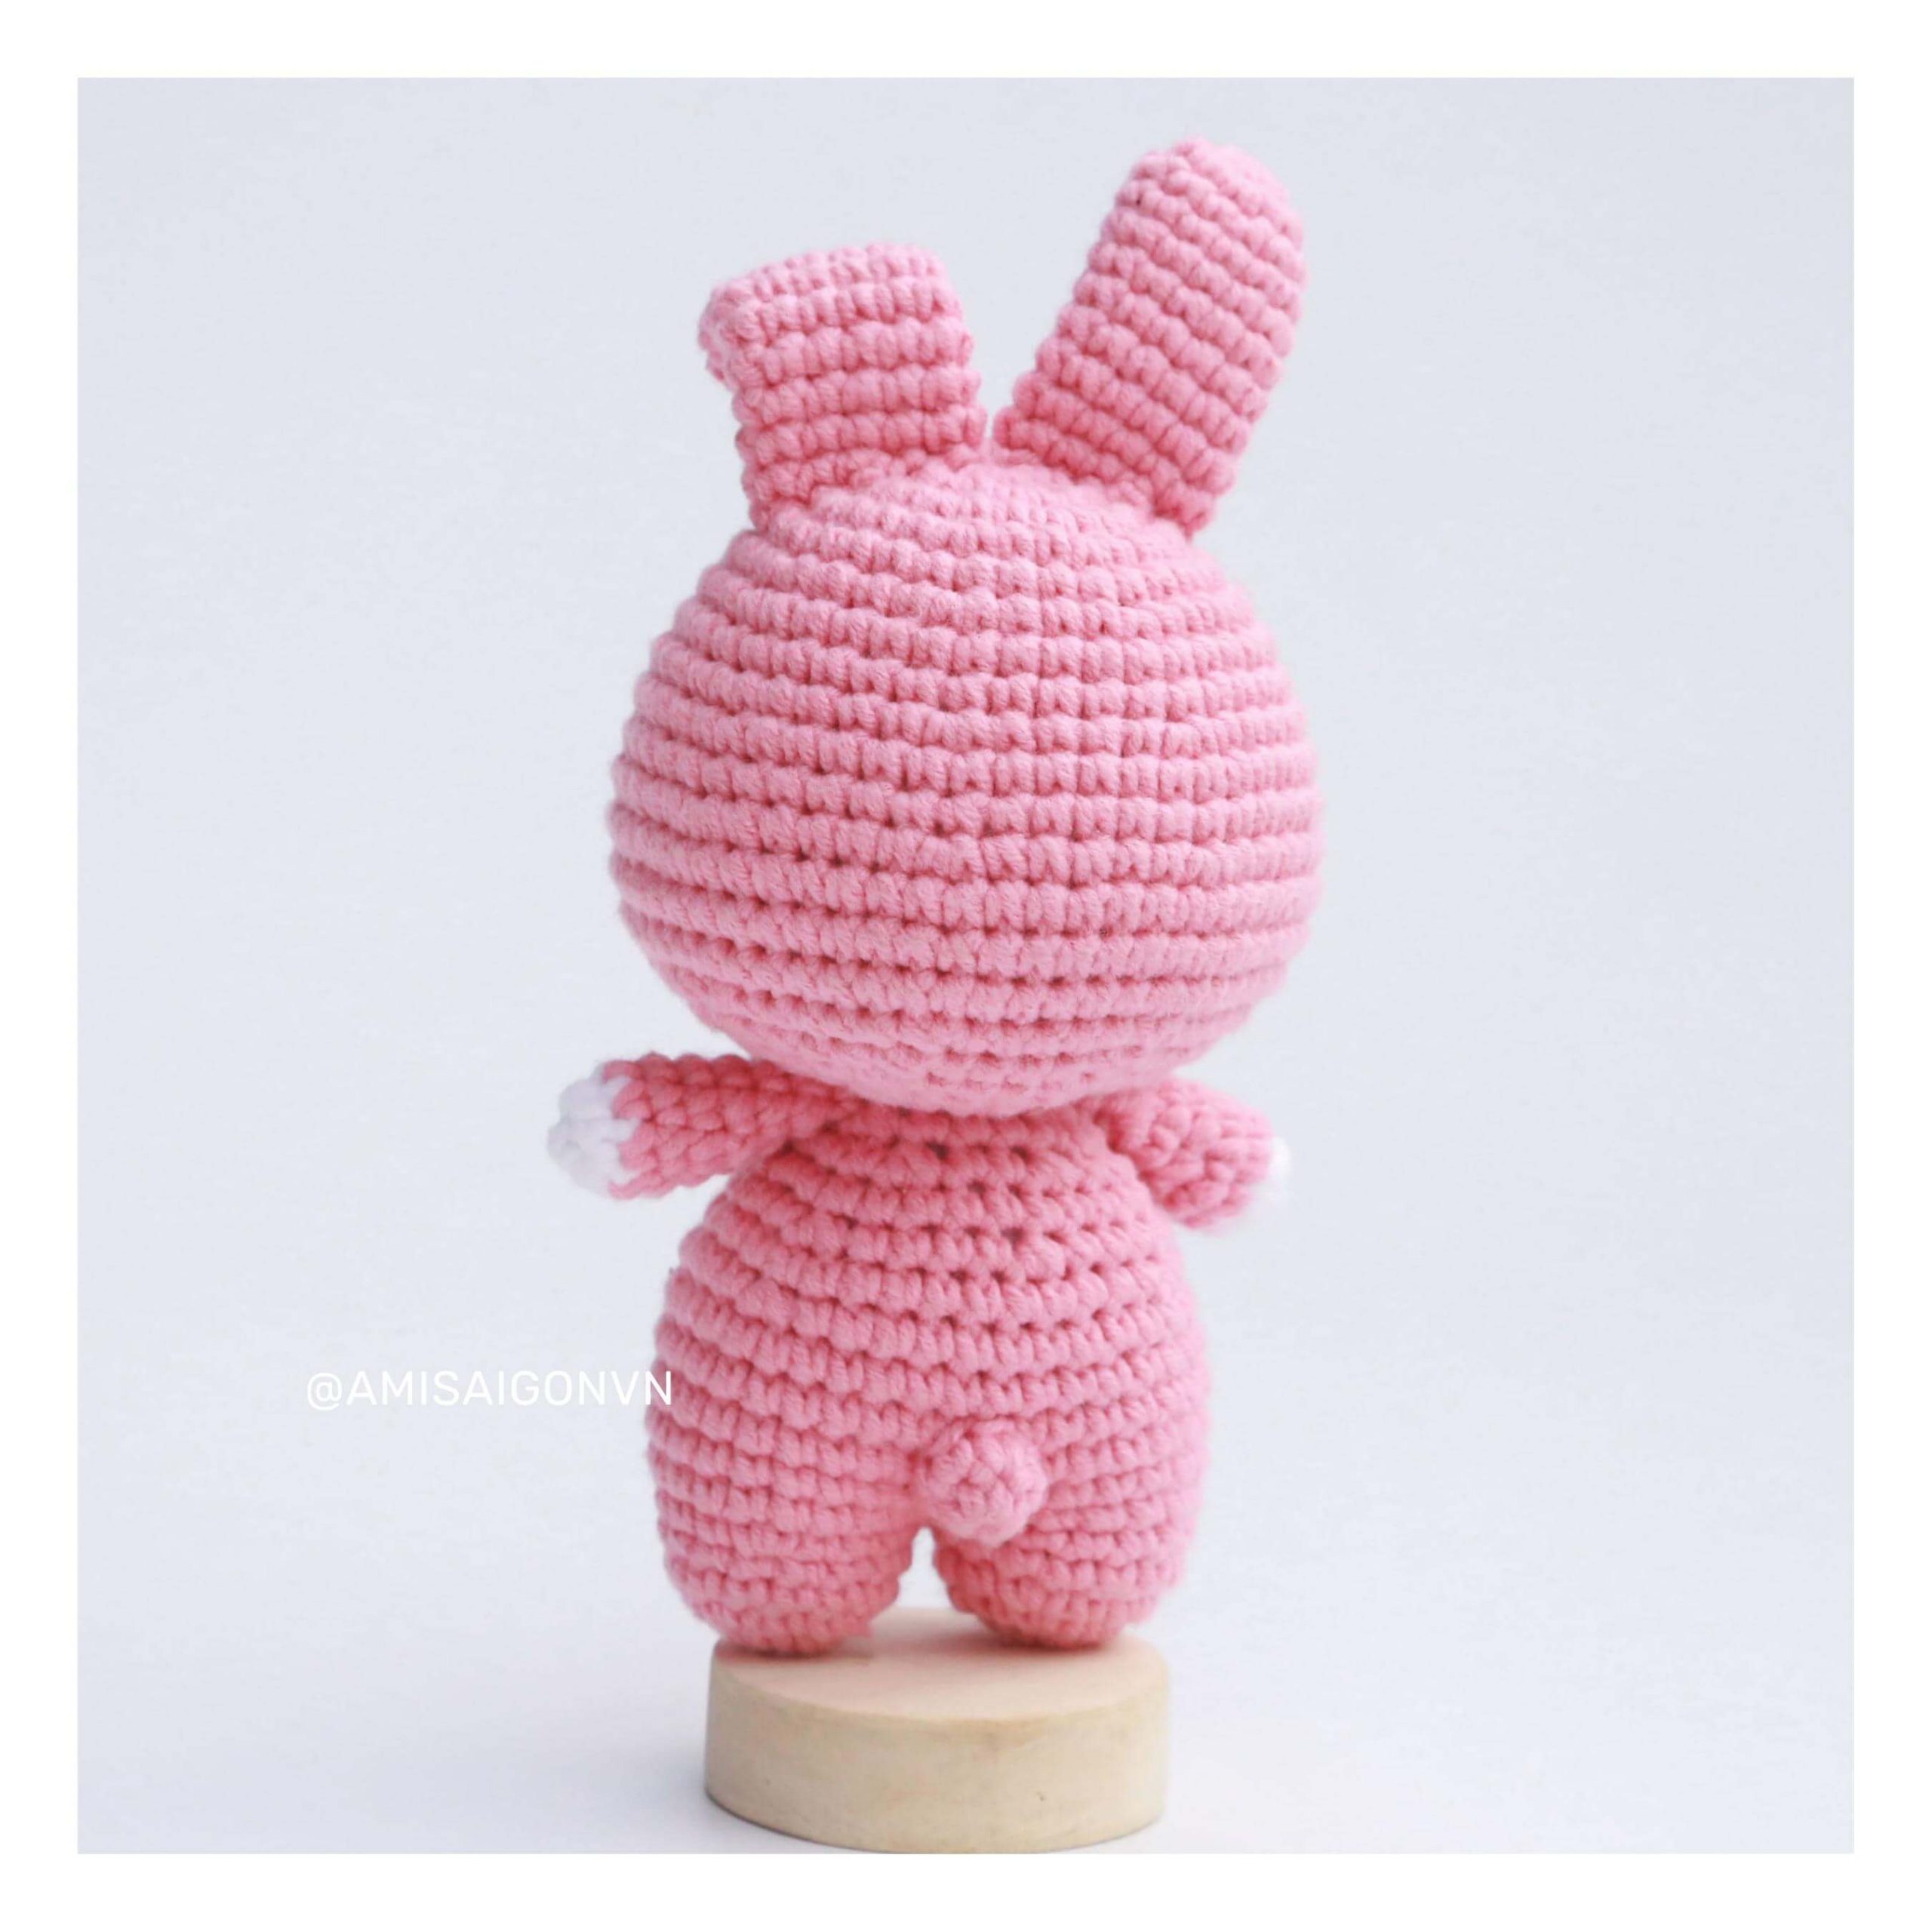 cooky-amigurumi-crochet-pattern-amisaigon (11)